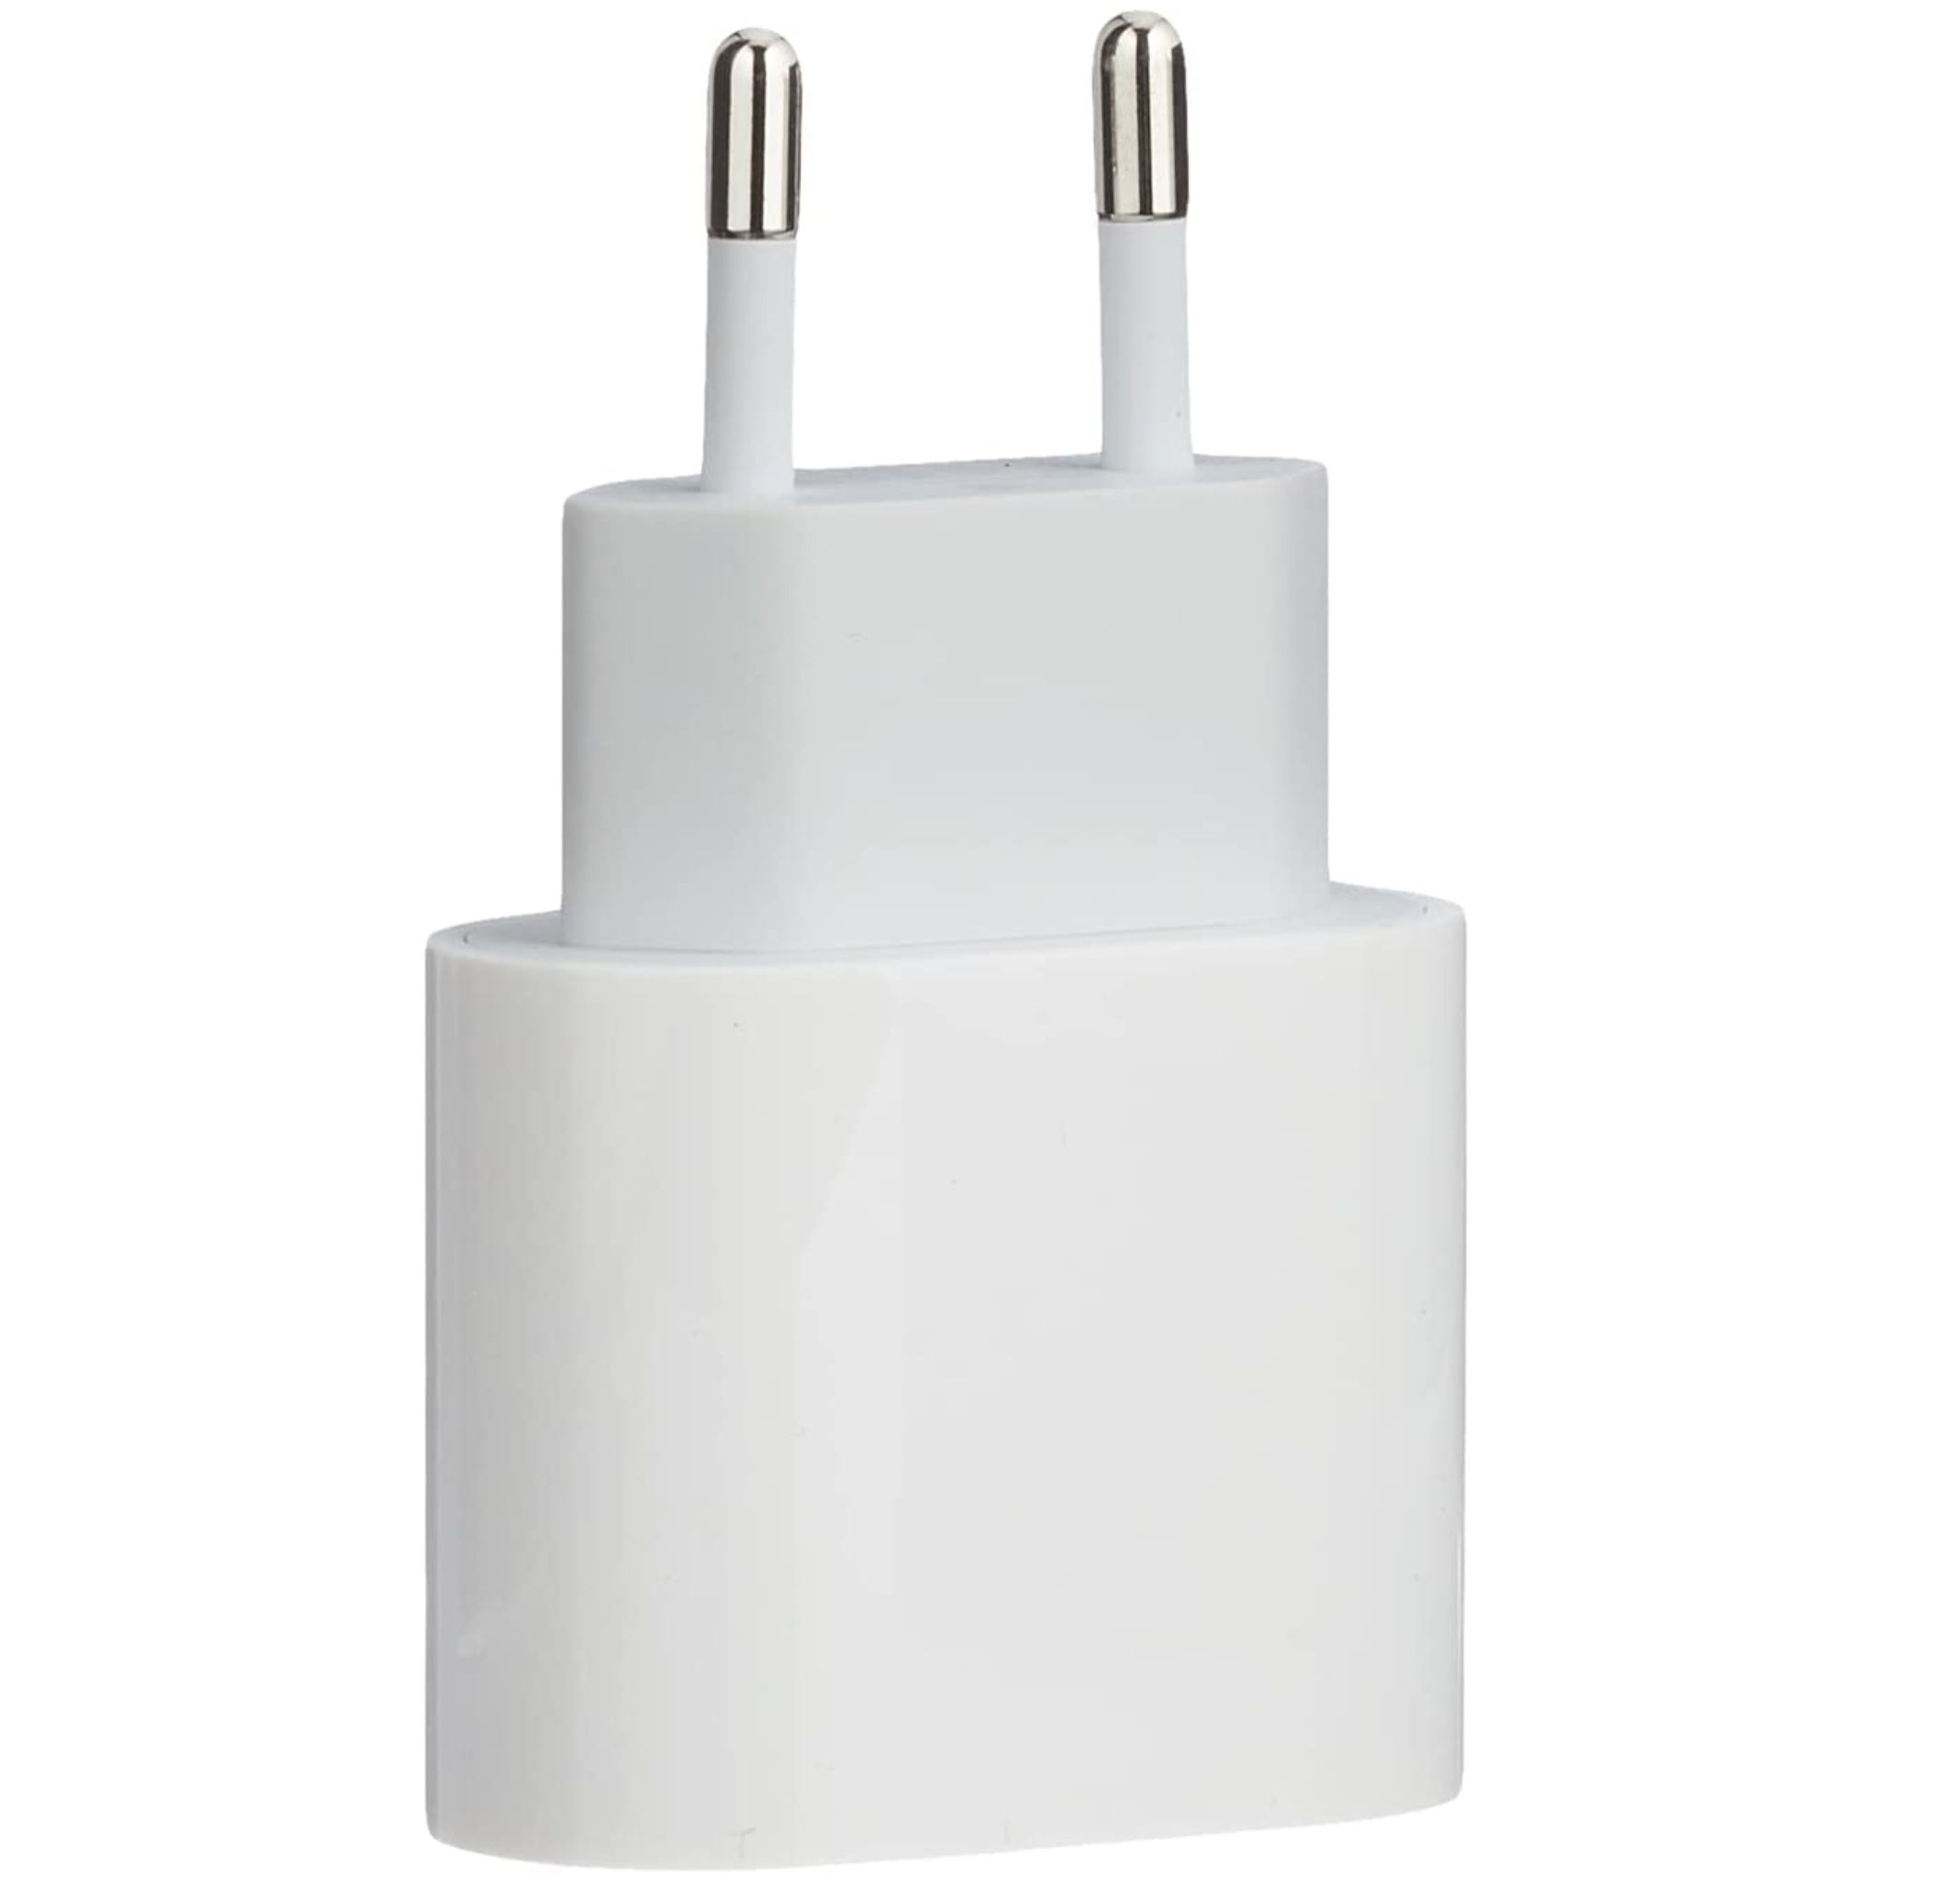 Apple 20W USB-C Power Adapter für 13,59€ (statt 18€) &#8211; Prime